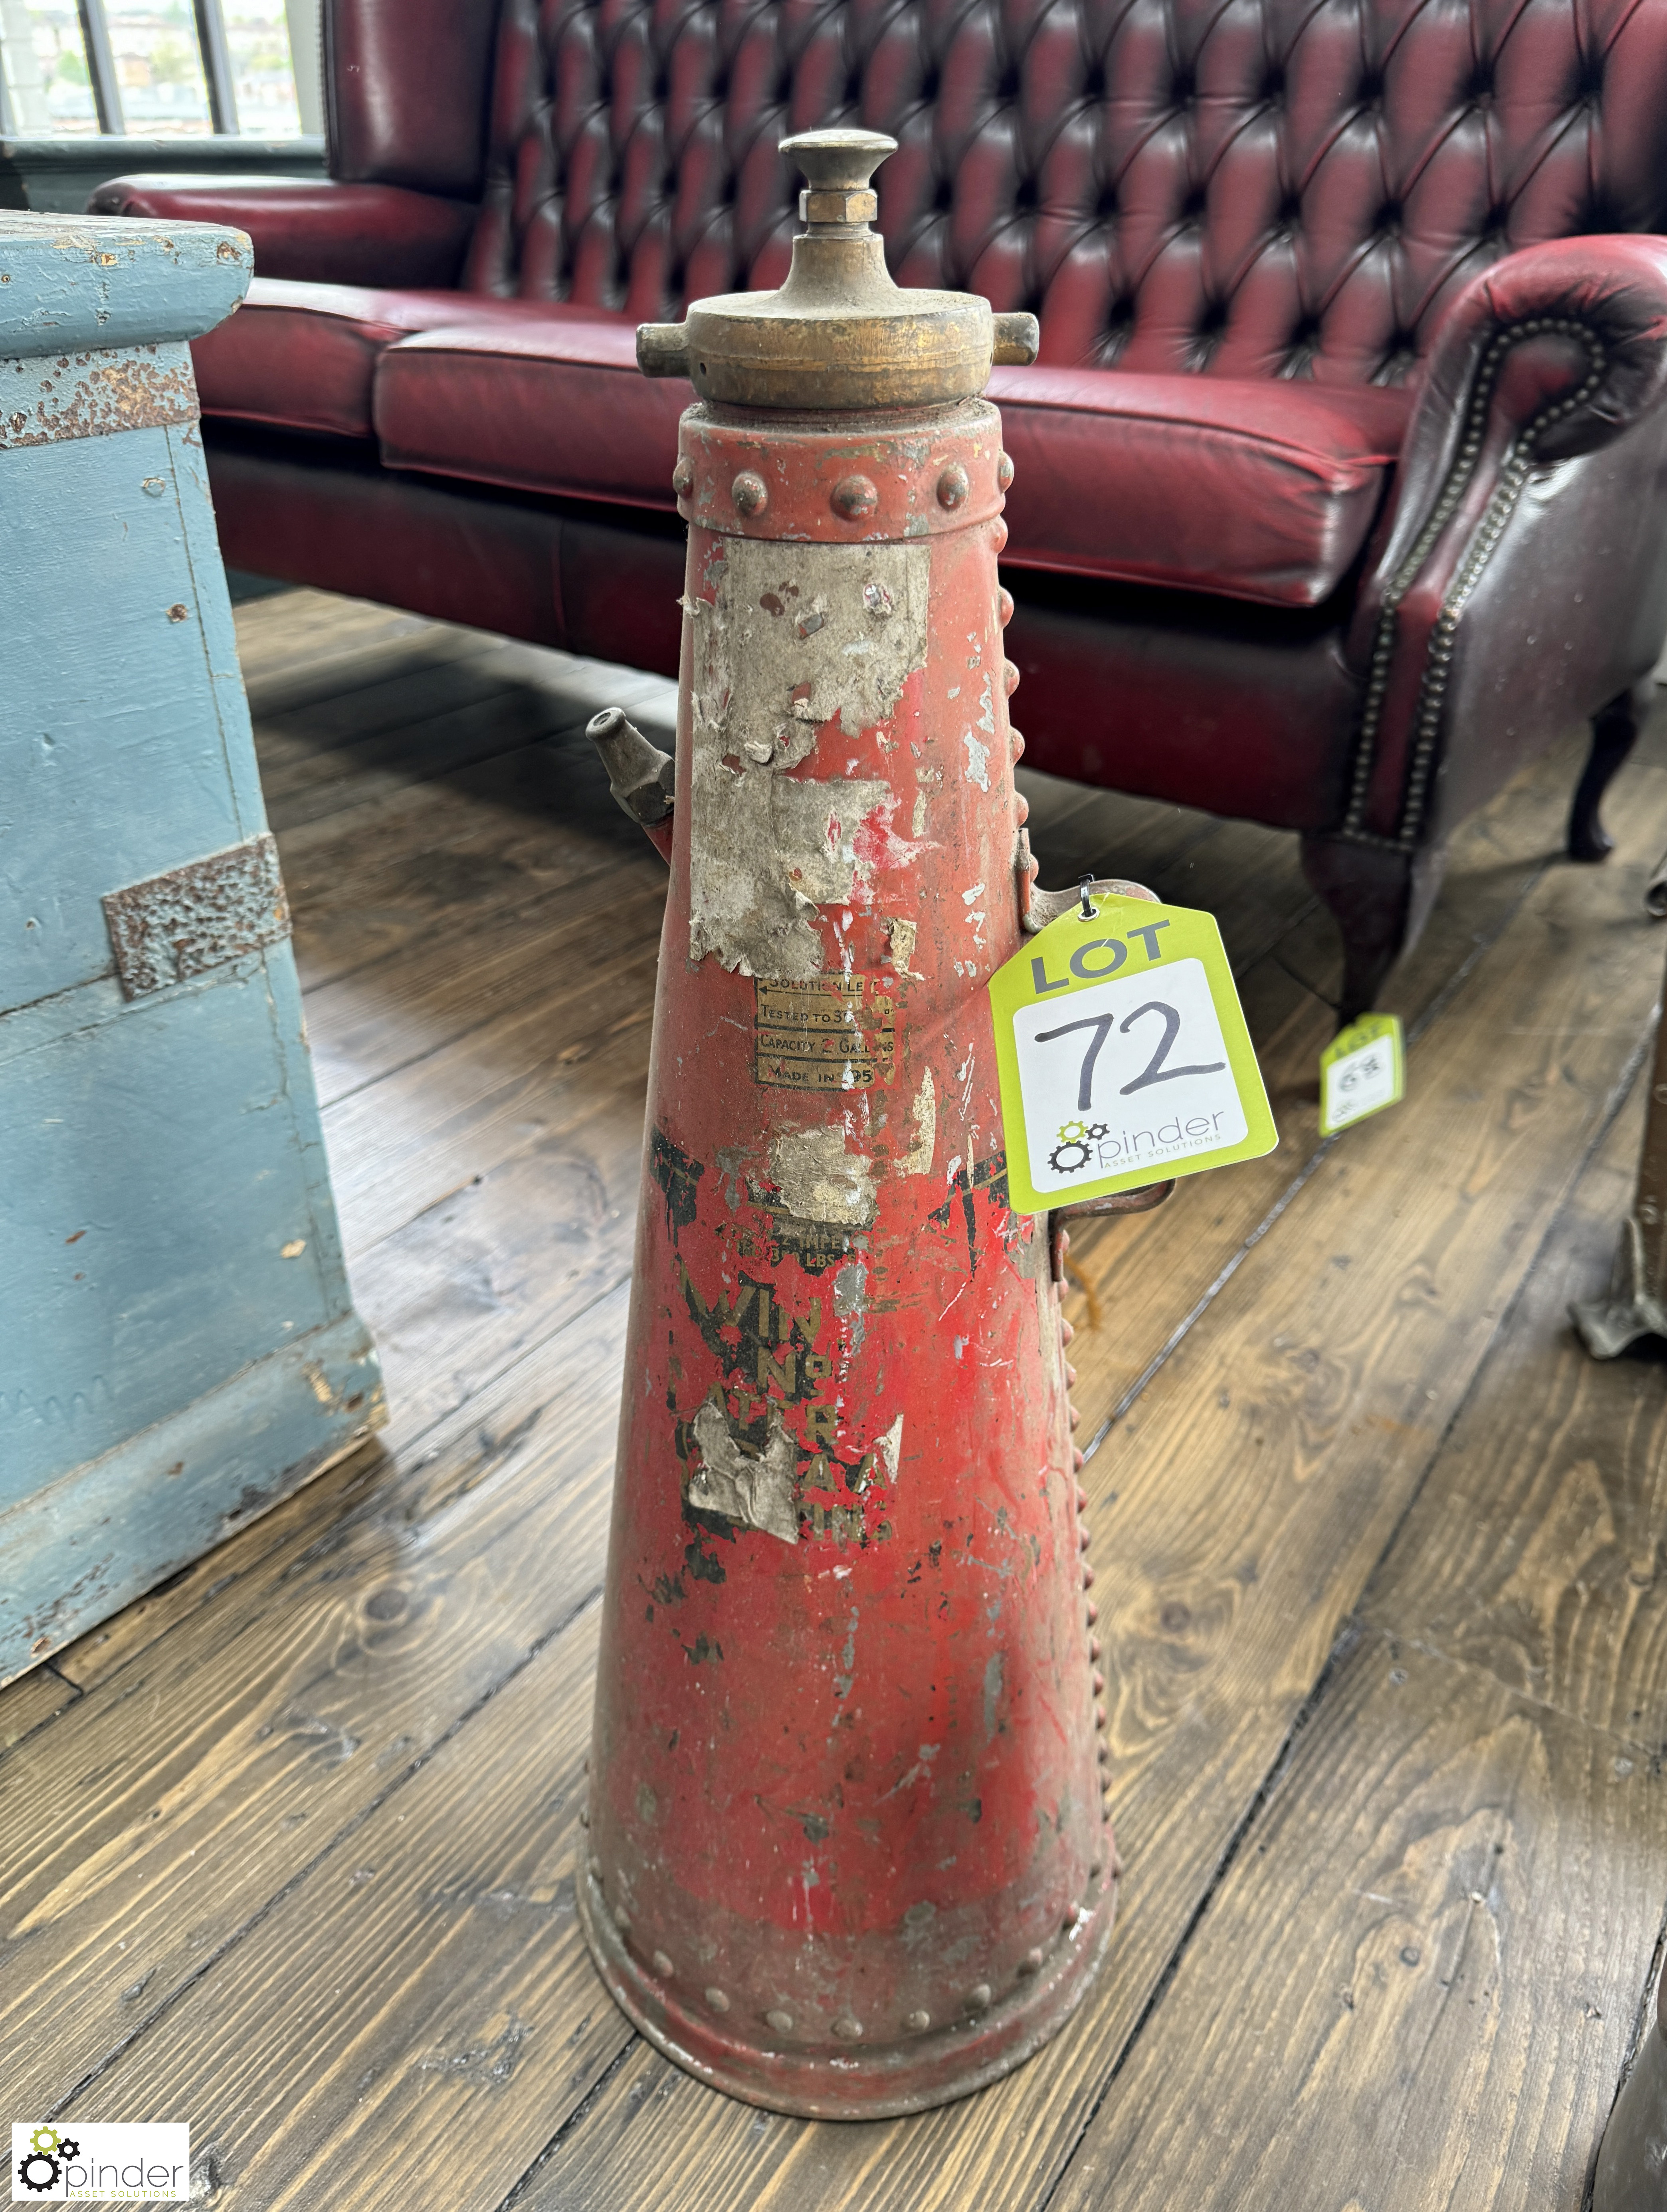 Antique Fire Extinguisher